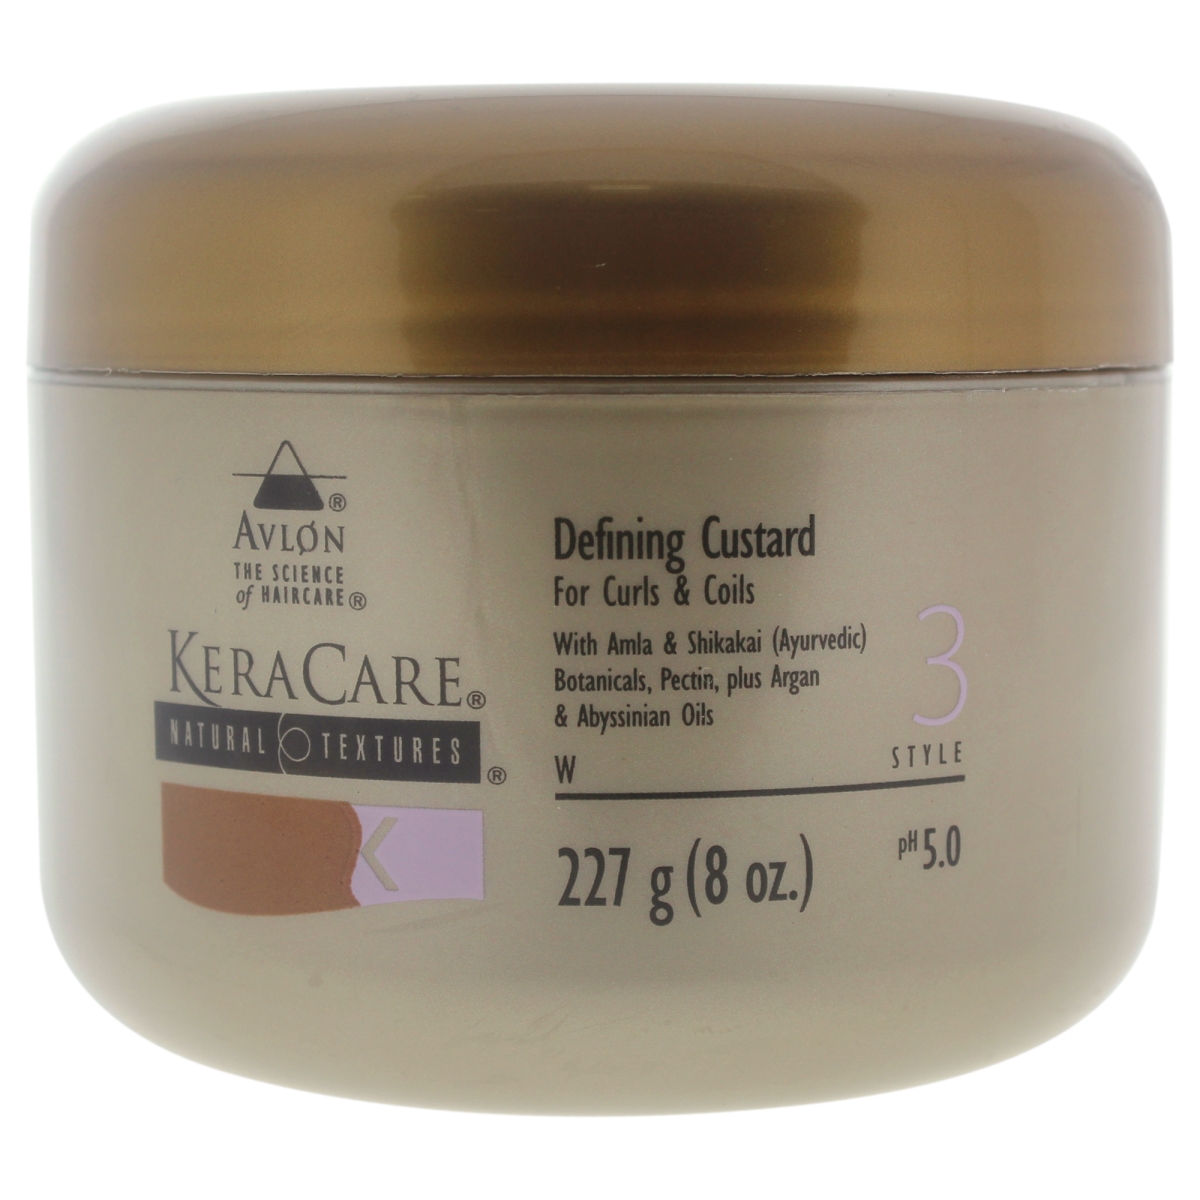 U-hc-11687 8 Oz Cream - Natural Textures Defining Custard